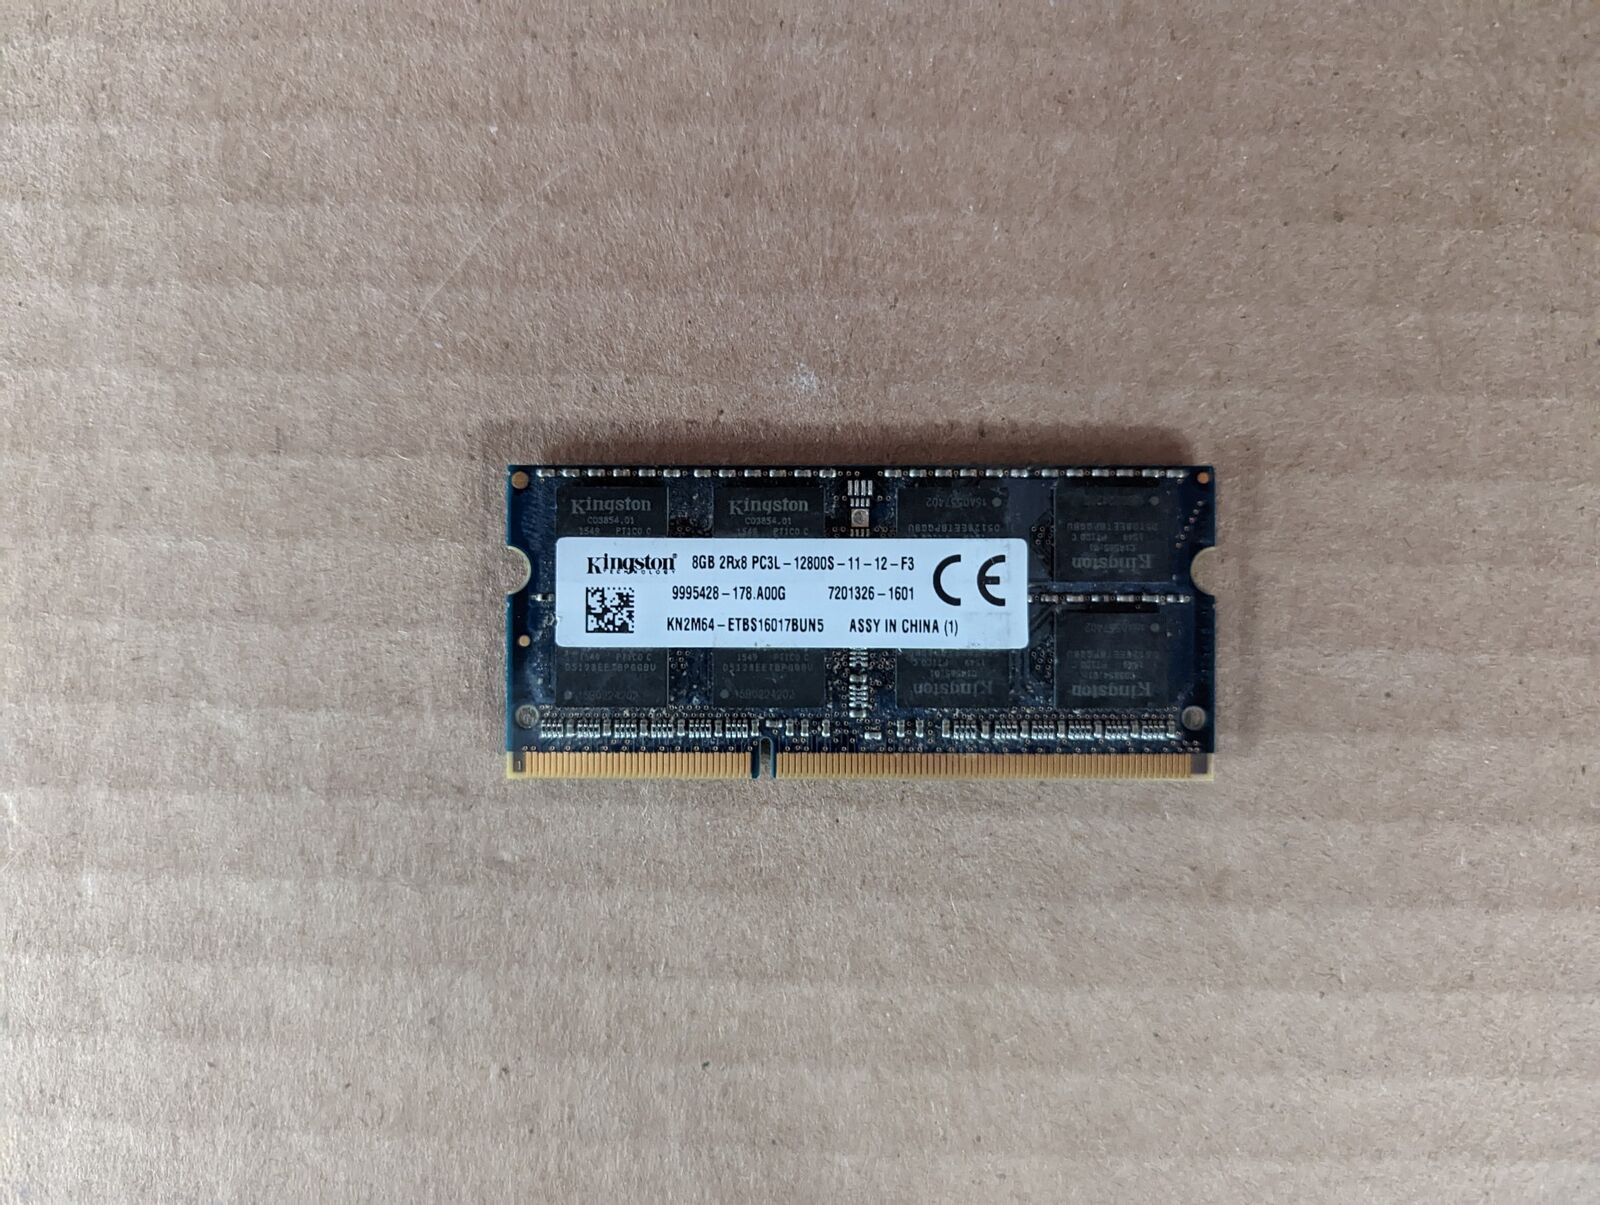 KINGSTON 8GB 2RX8 PC3L-12800S LAPTOP RAM KN2M64-ETBS ZZ9-5(3)